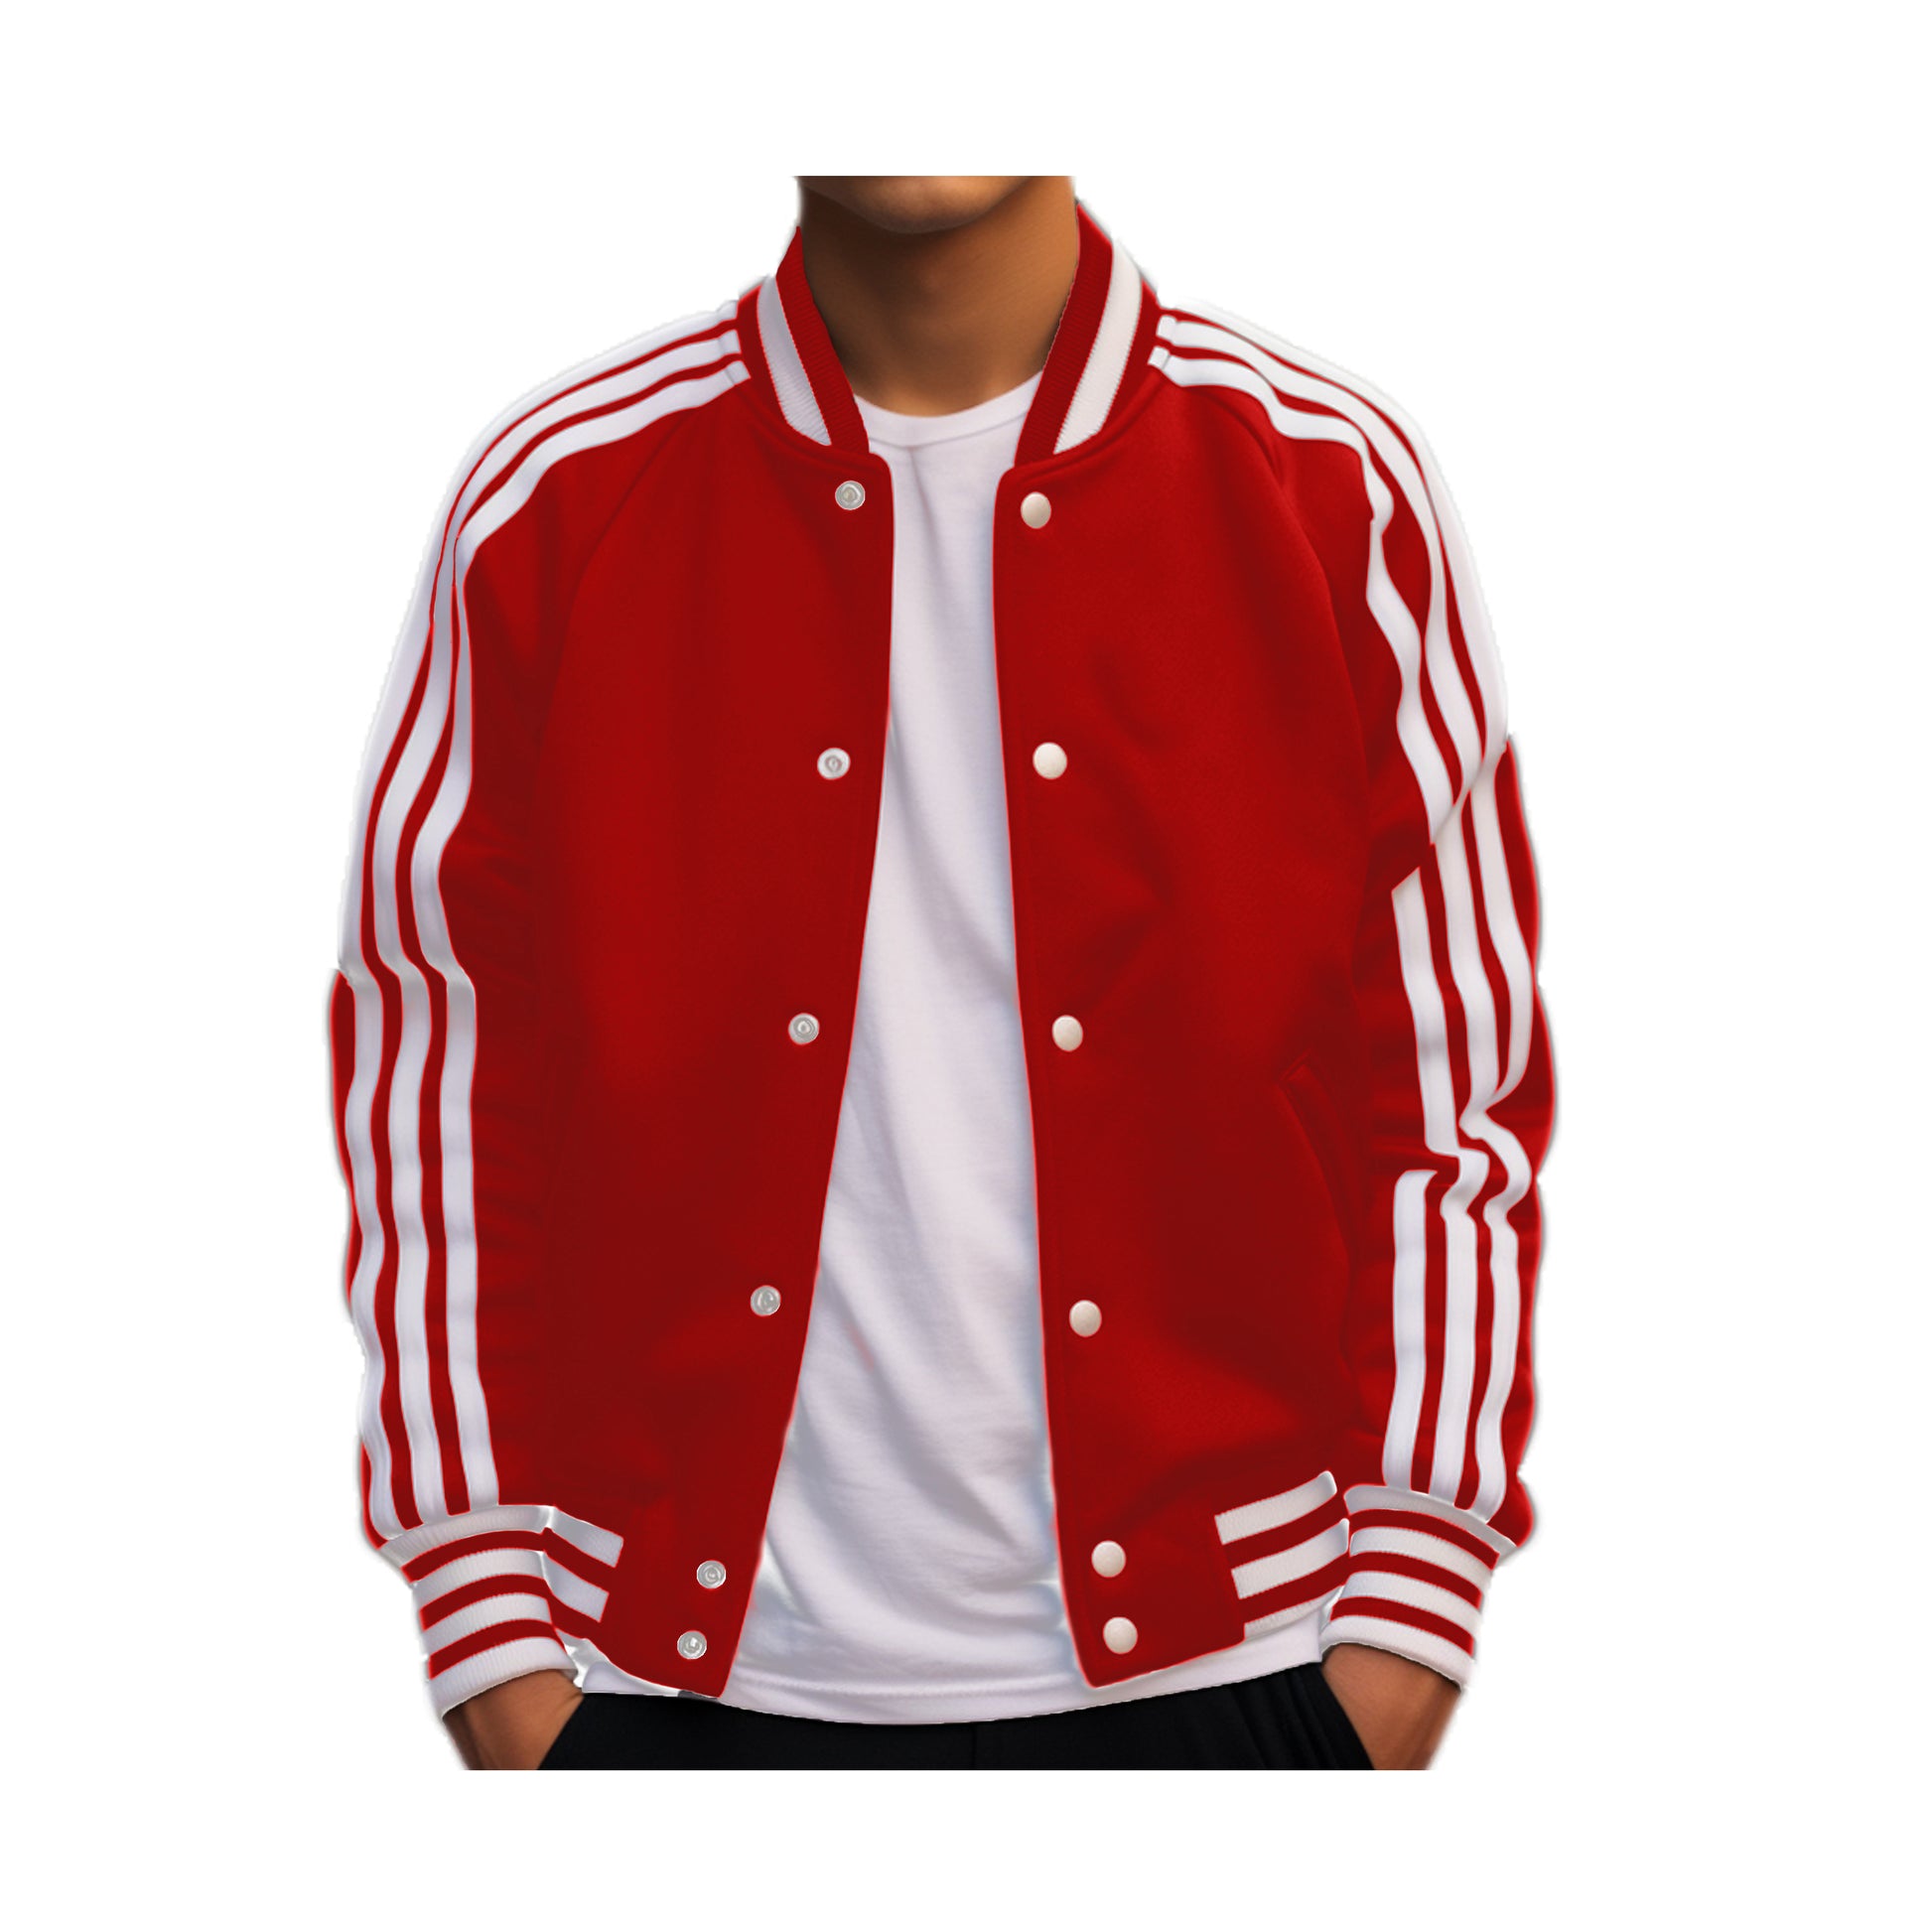 Red Striped Varsity Jacket